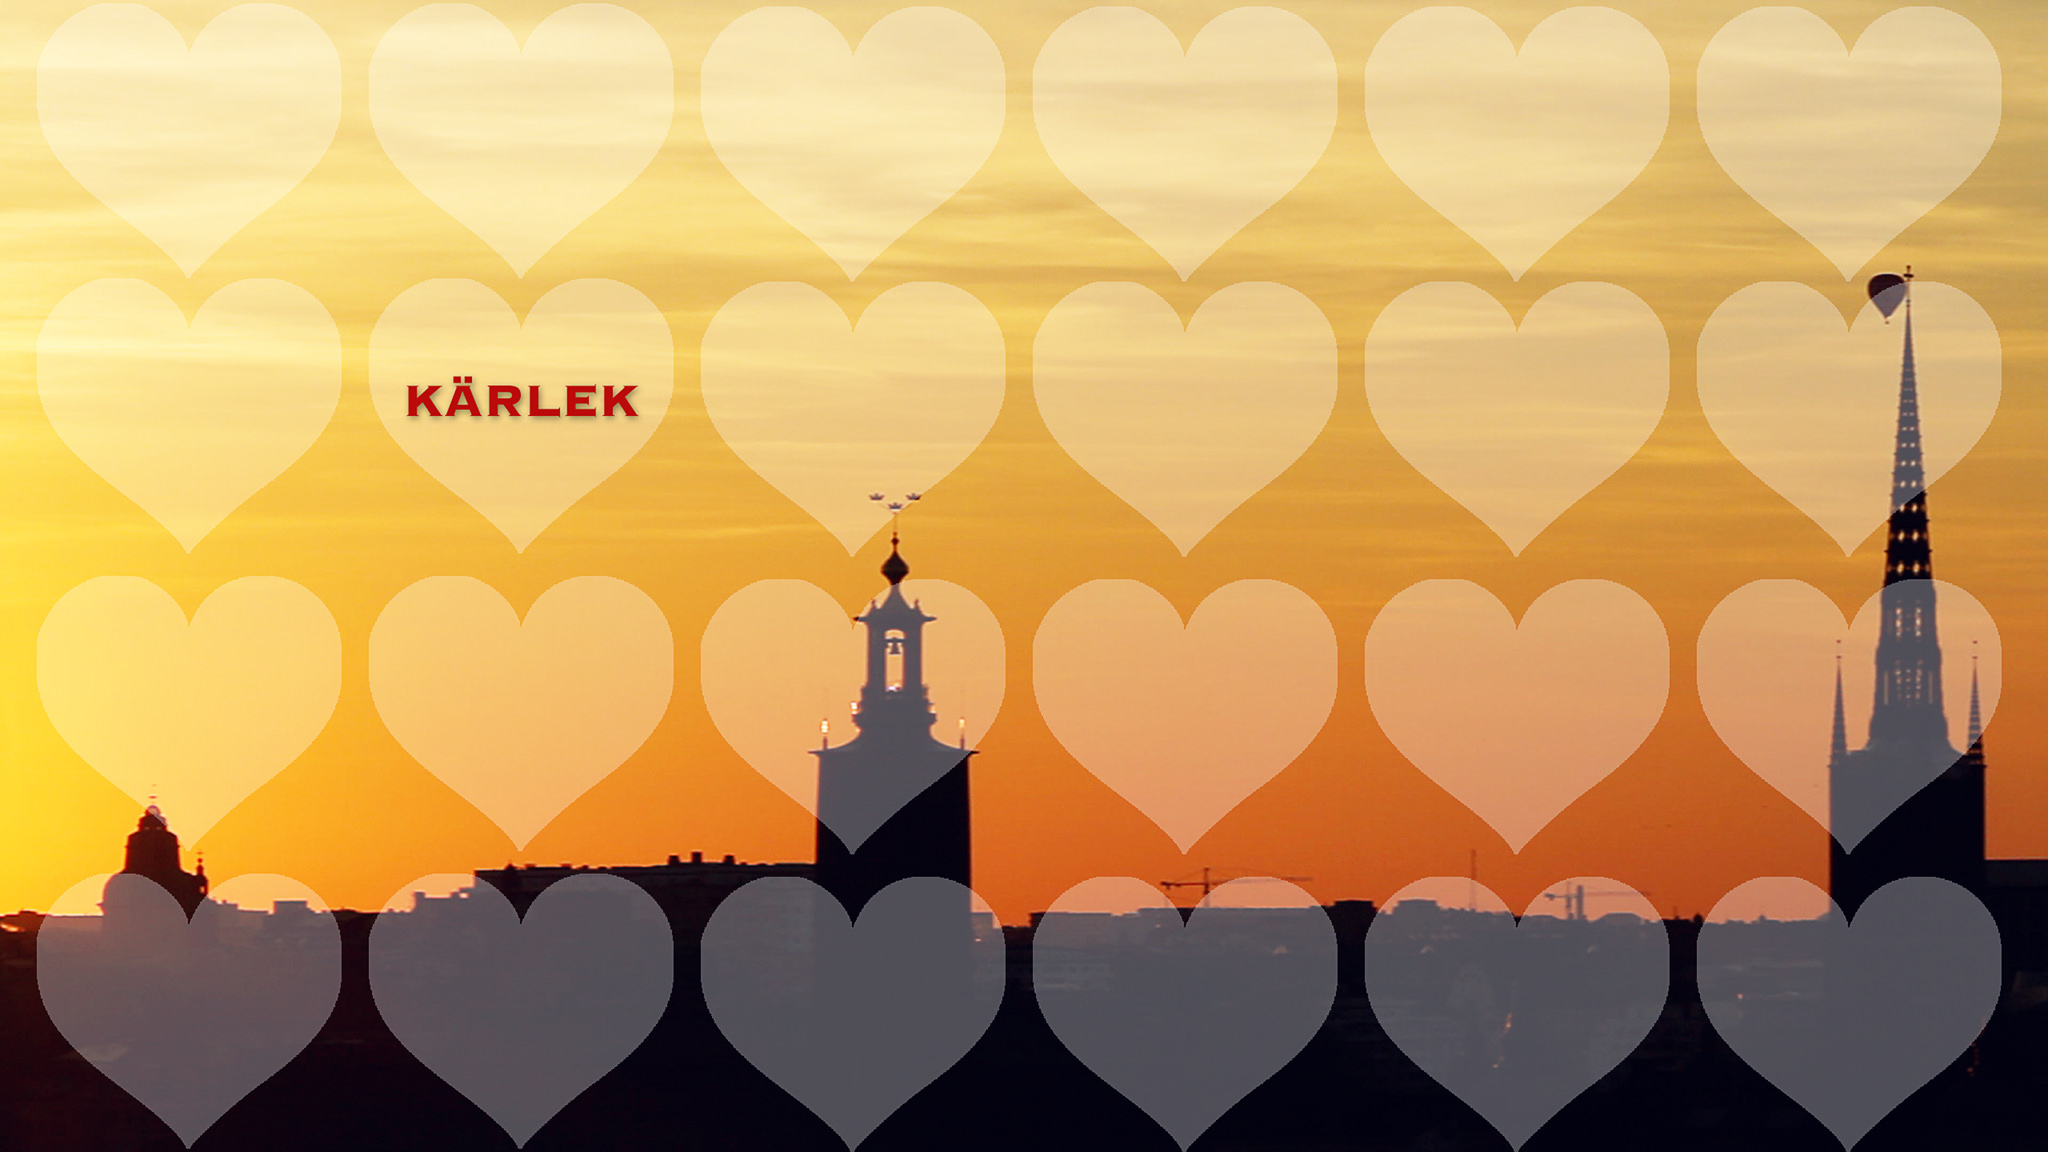 Stockholm sky line hearts kärlek love valentine's day 14 february date